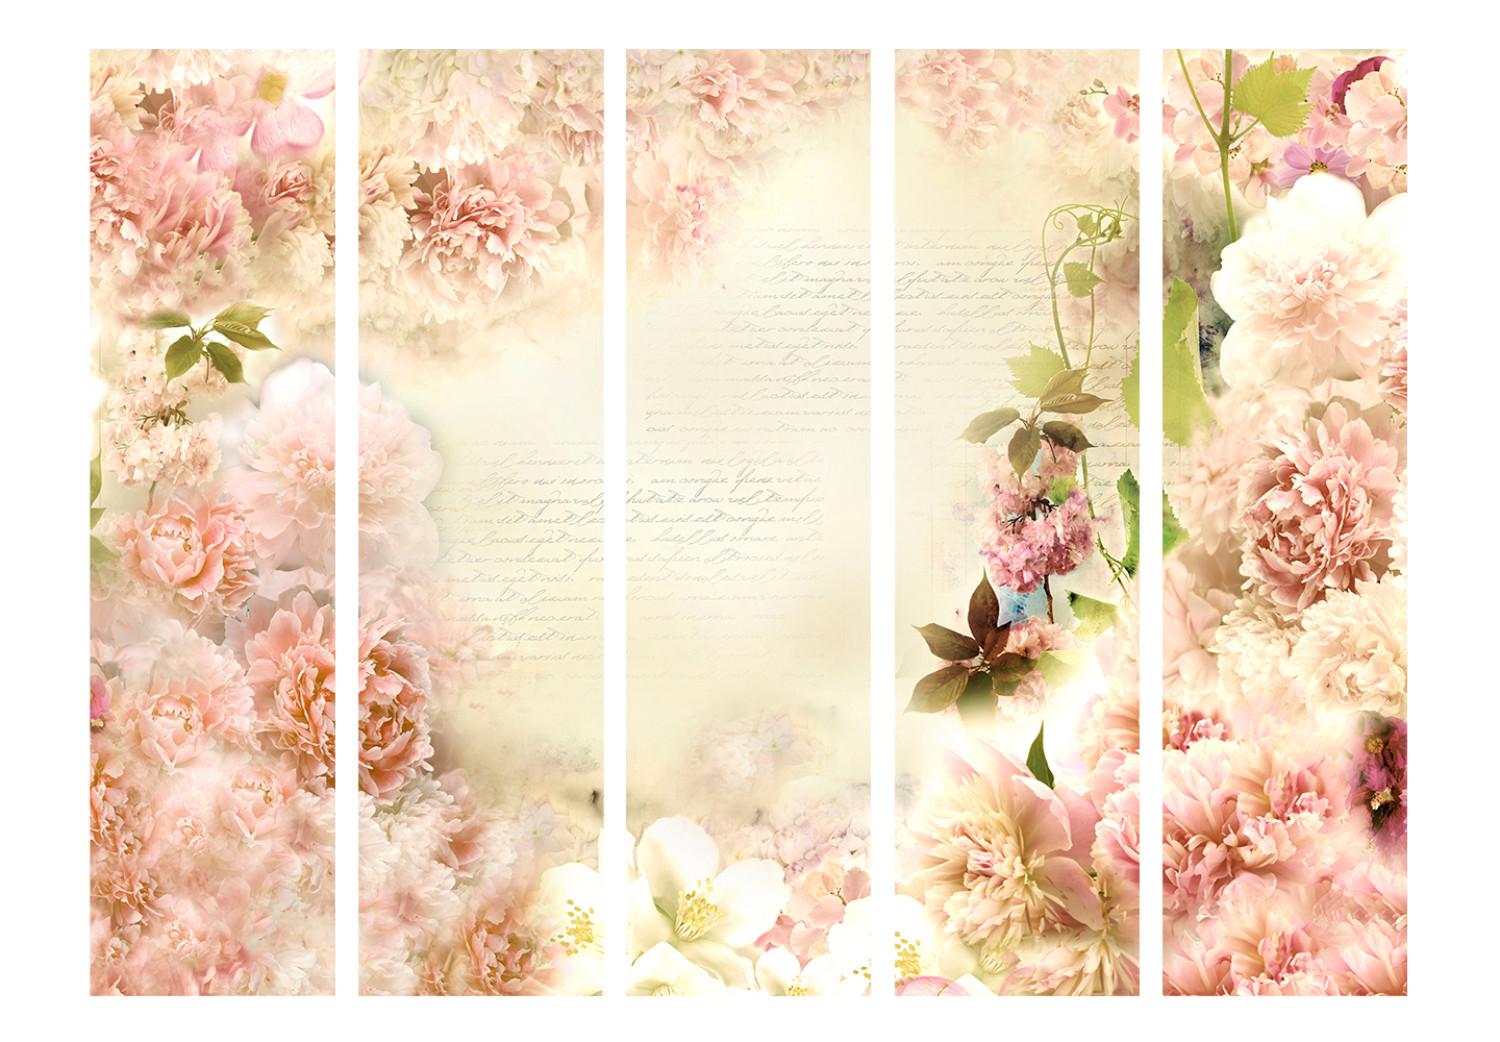 Biombo original Perfume de primavera II (5 partes) - collage romántico rosas